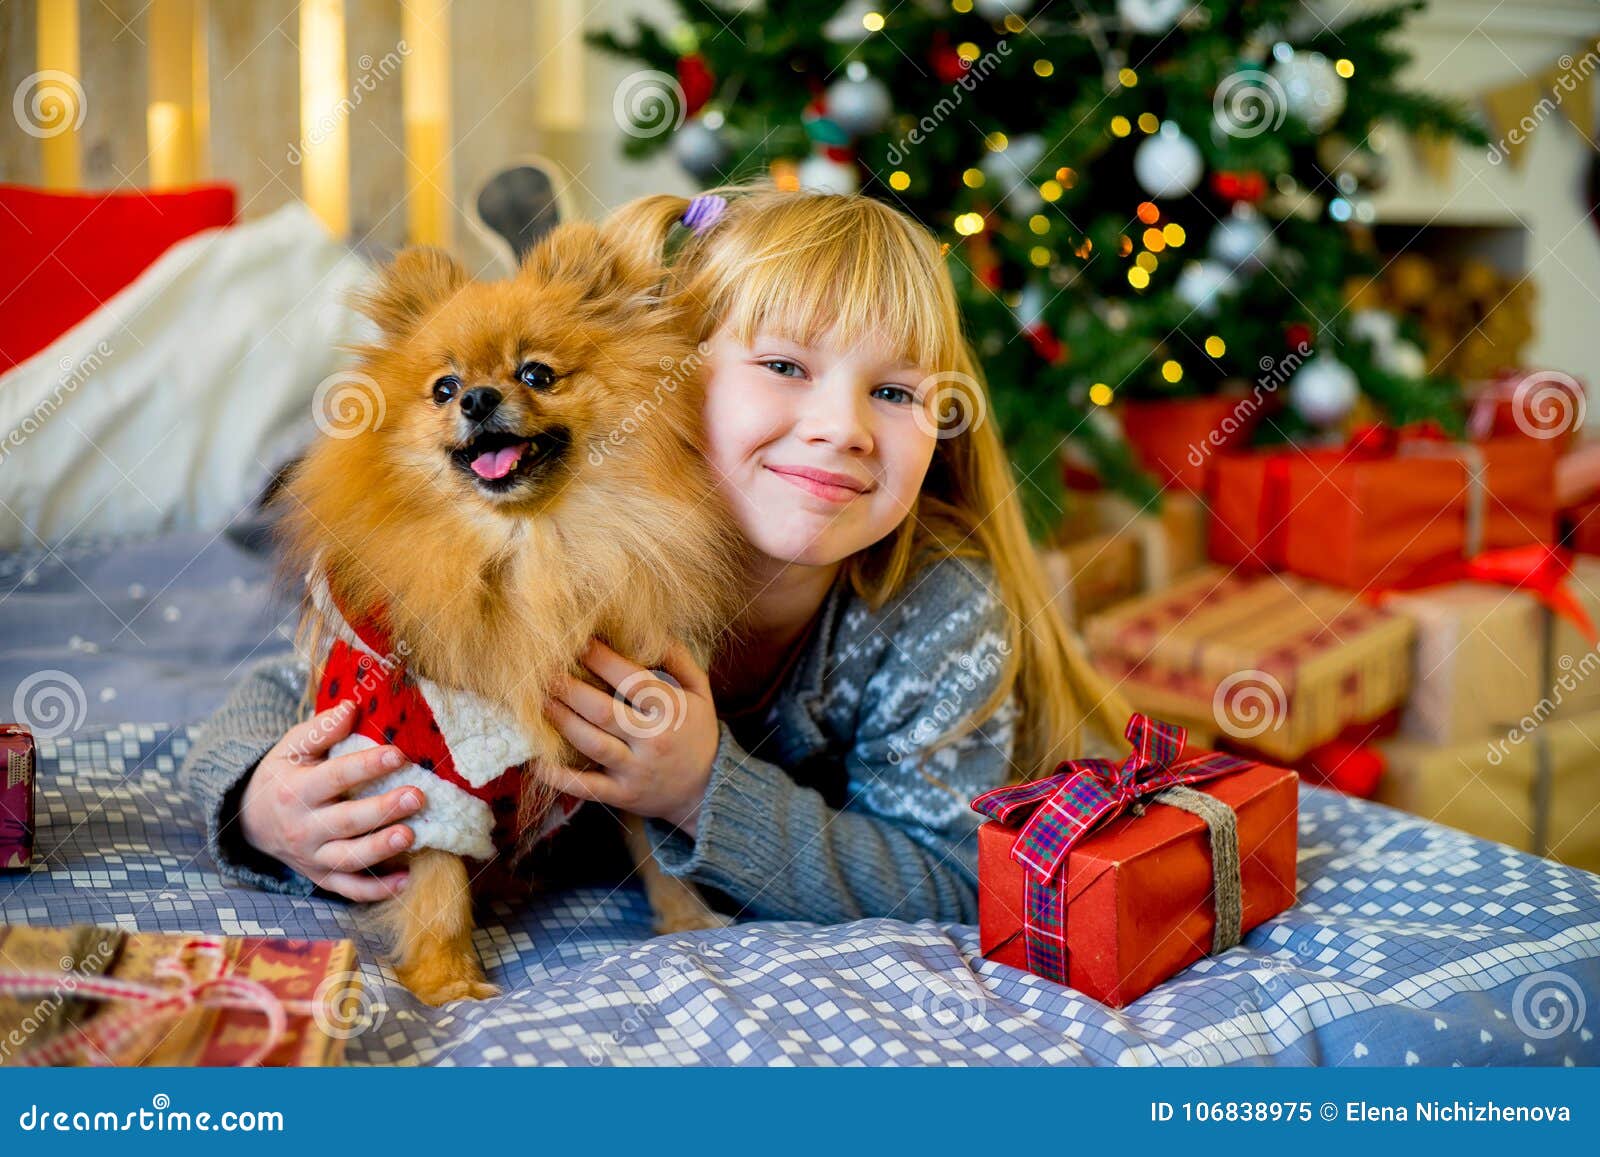 Girl with dog on christmas stock image. Image of little - 106838975